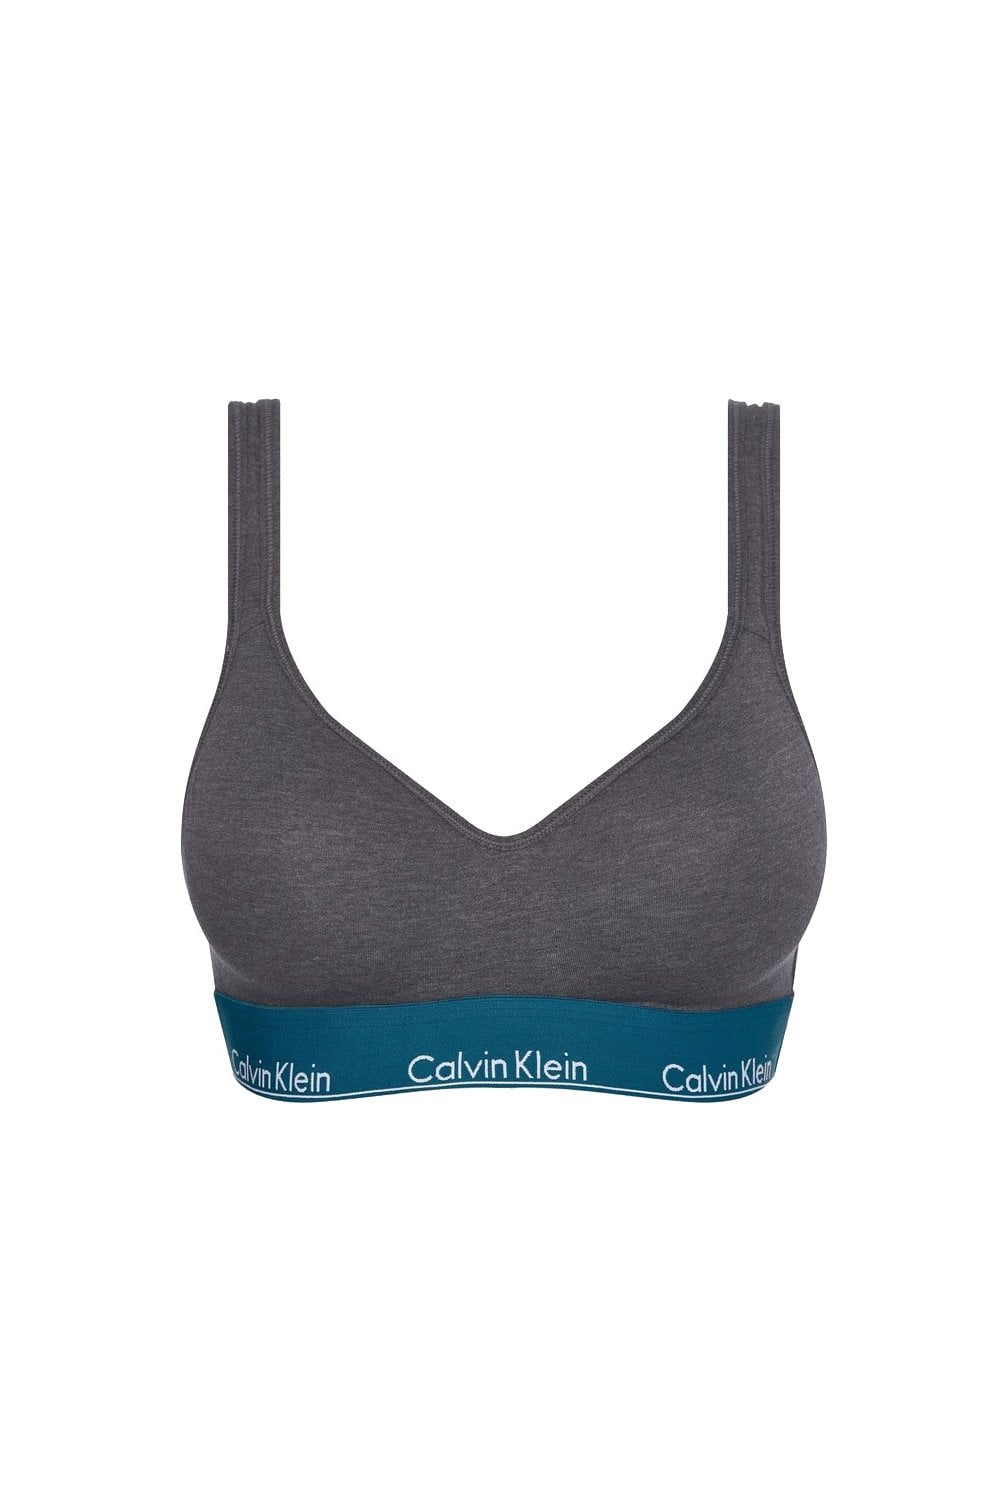 Calvin Klein Modern Cotton Lift Bralette - Charcoal Heather/Topaz